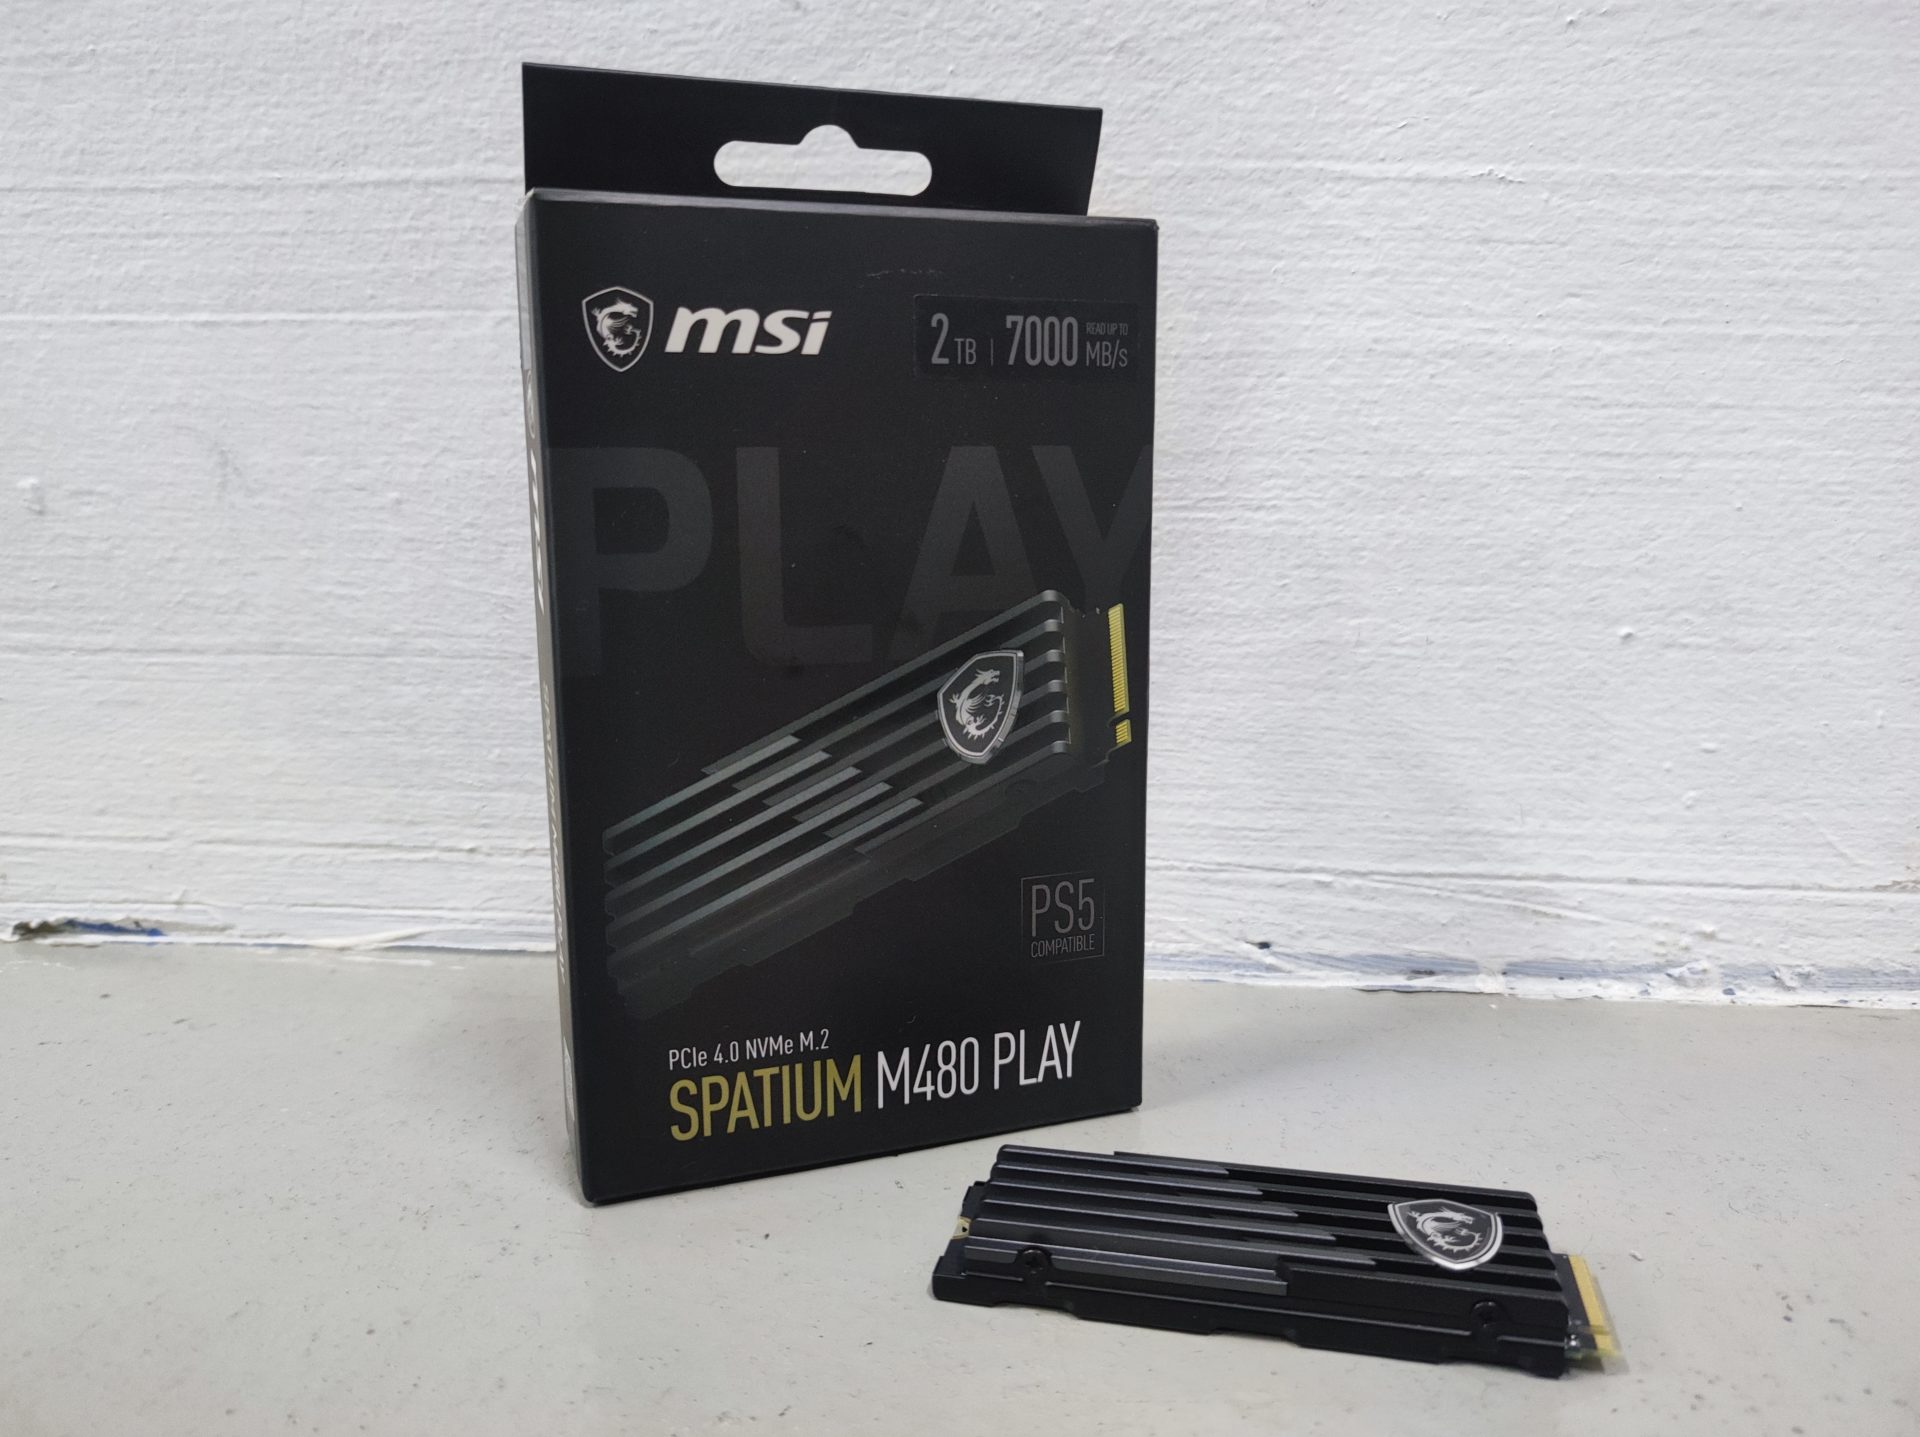 MSI - Disque dur SSD Spartium M480 - 1 To - PCI Express 4.0 X4 (NVME)